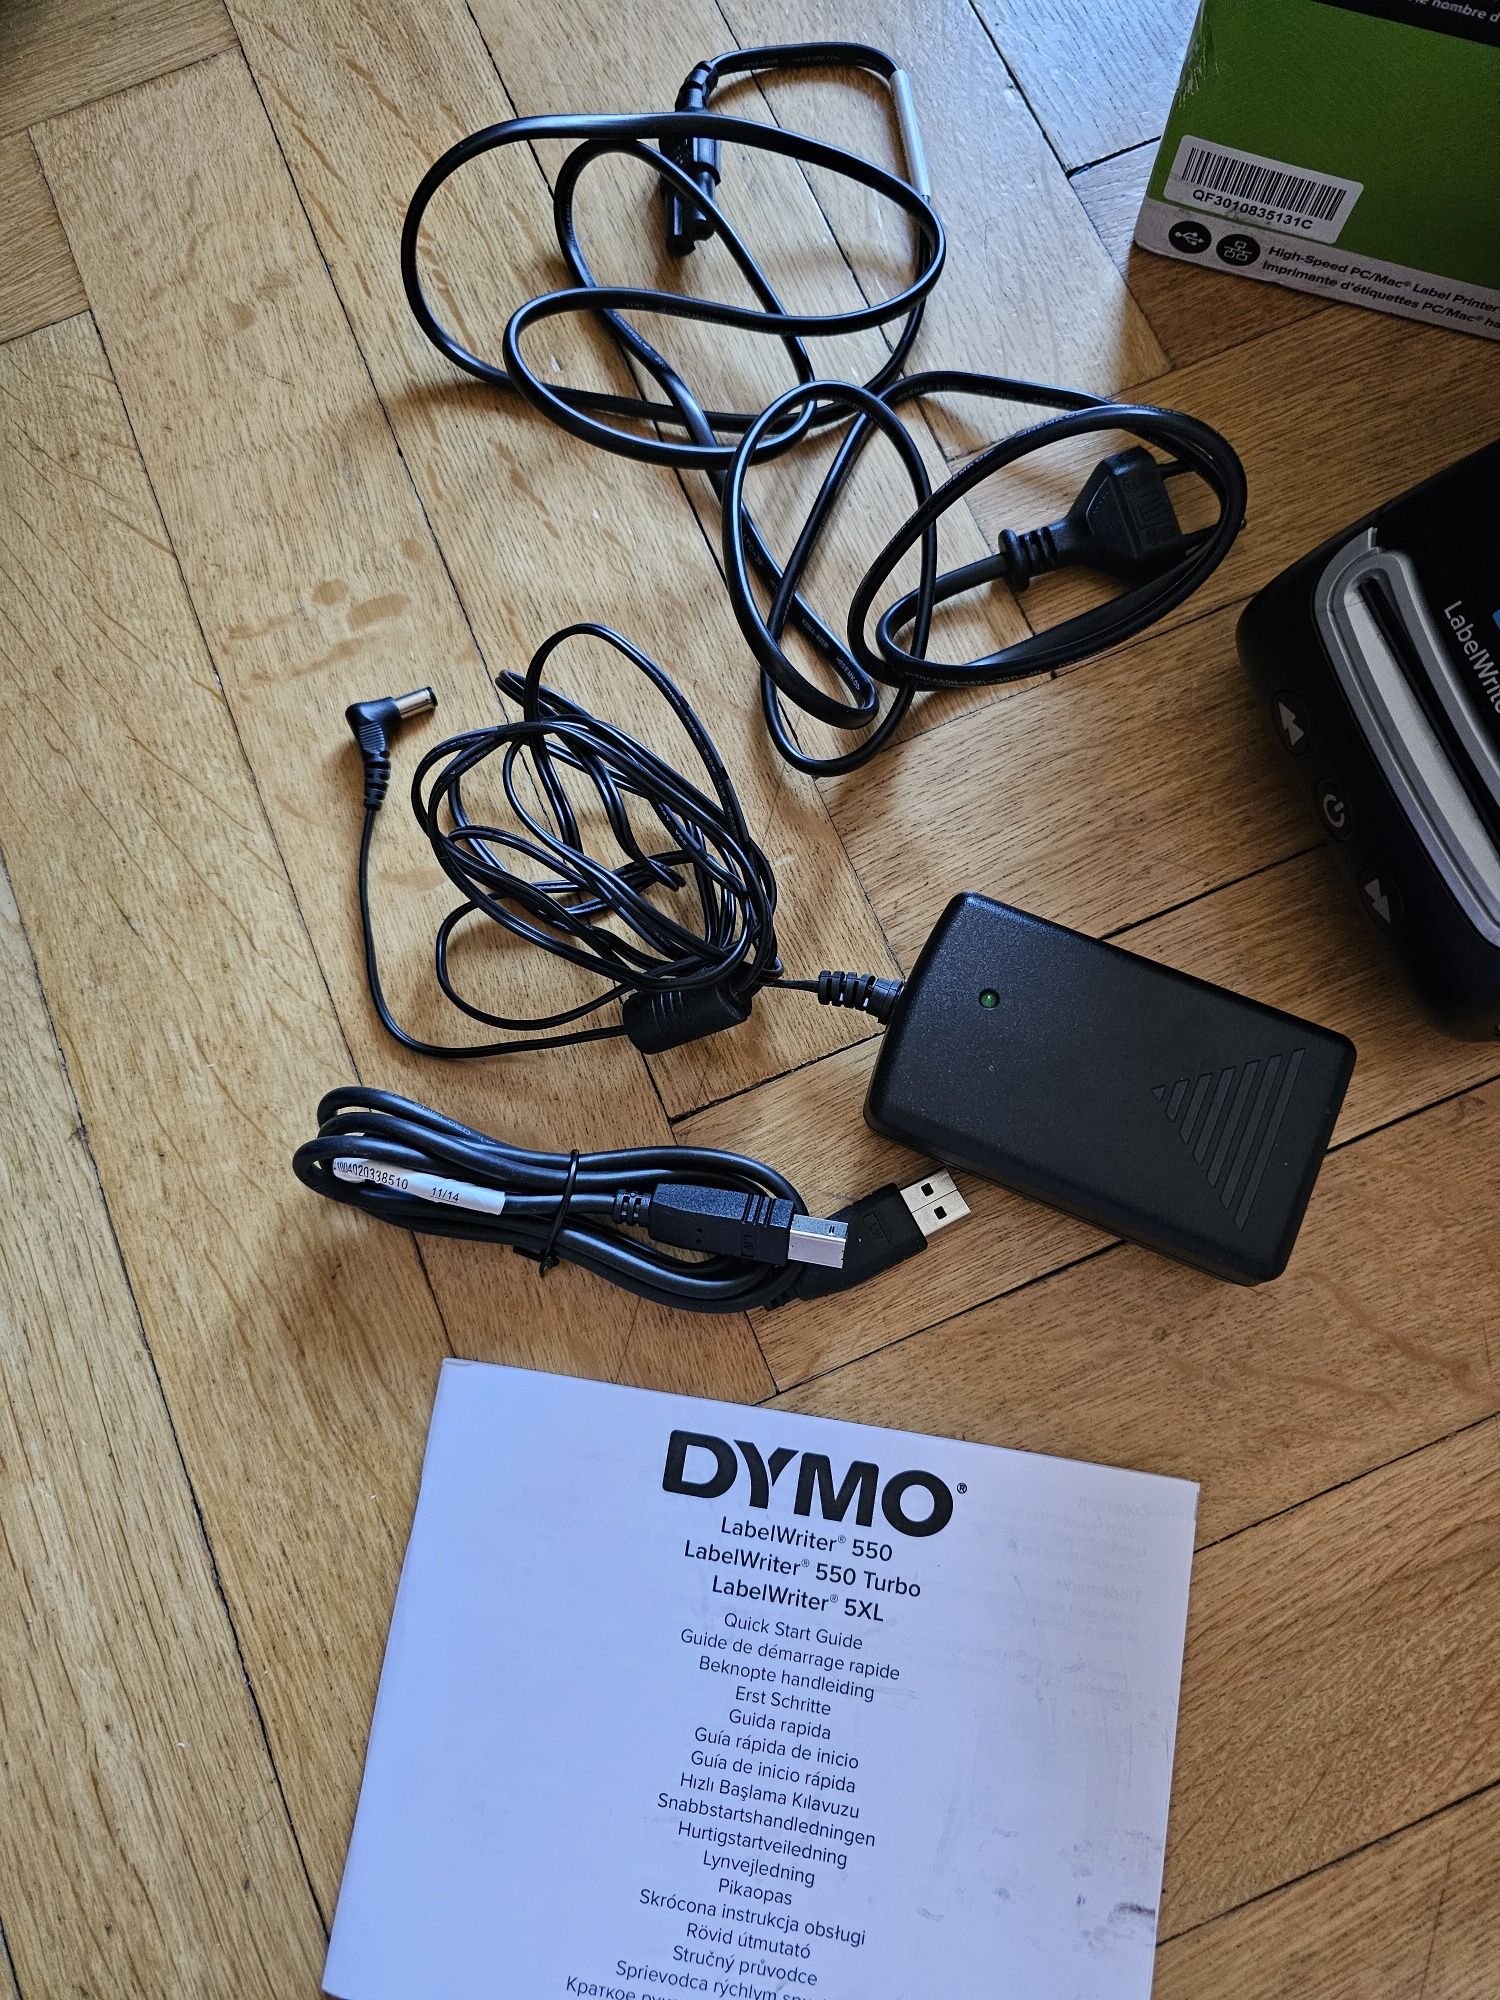 DYMO Labelwriter 550 TURBO Drukarka Etykiet LW LABEL WRITER printer 5x